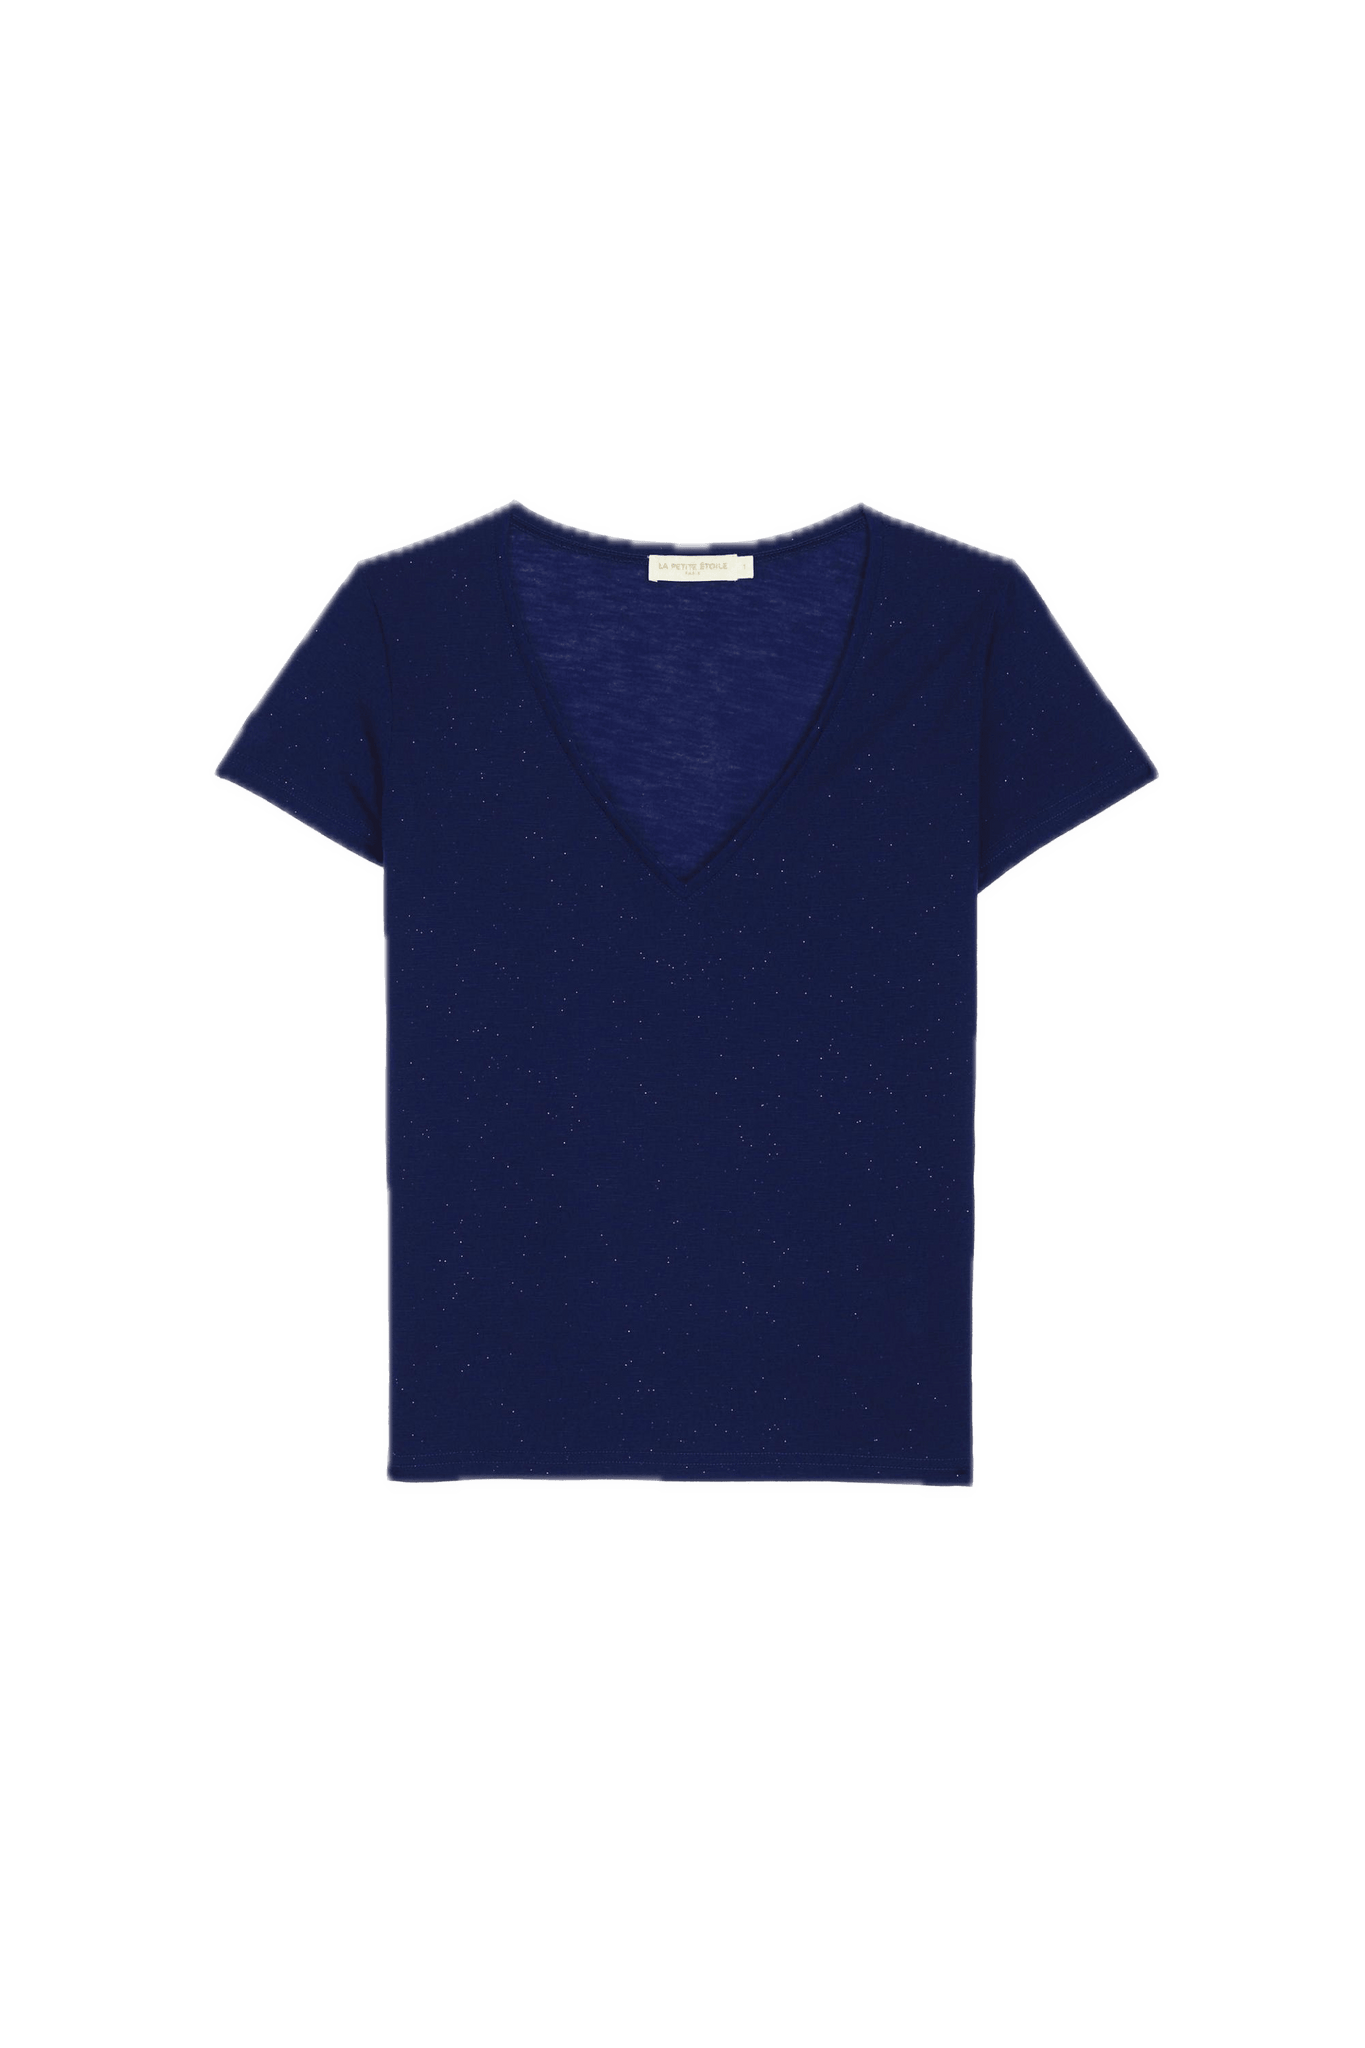 Camiseta La Petite Étoile Elvie Azul Marina de Cuello Pico - ECRU